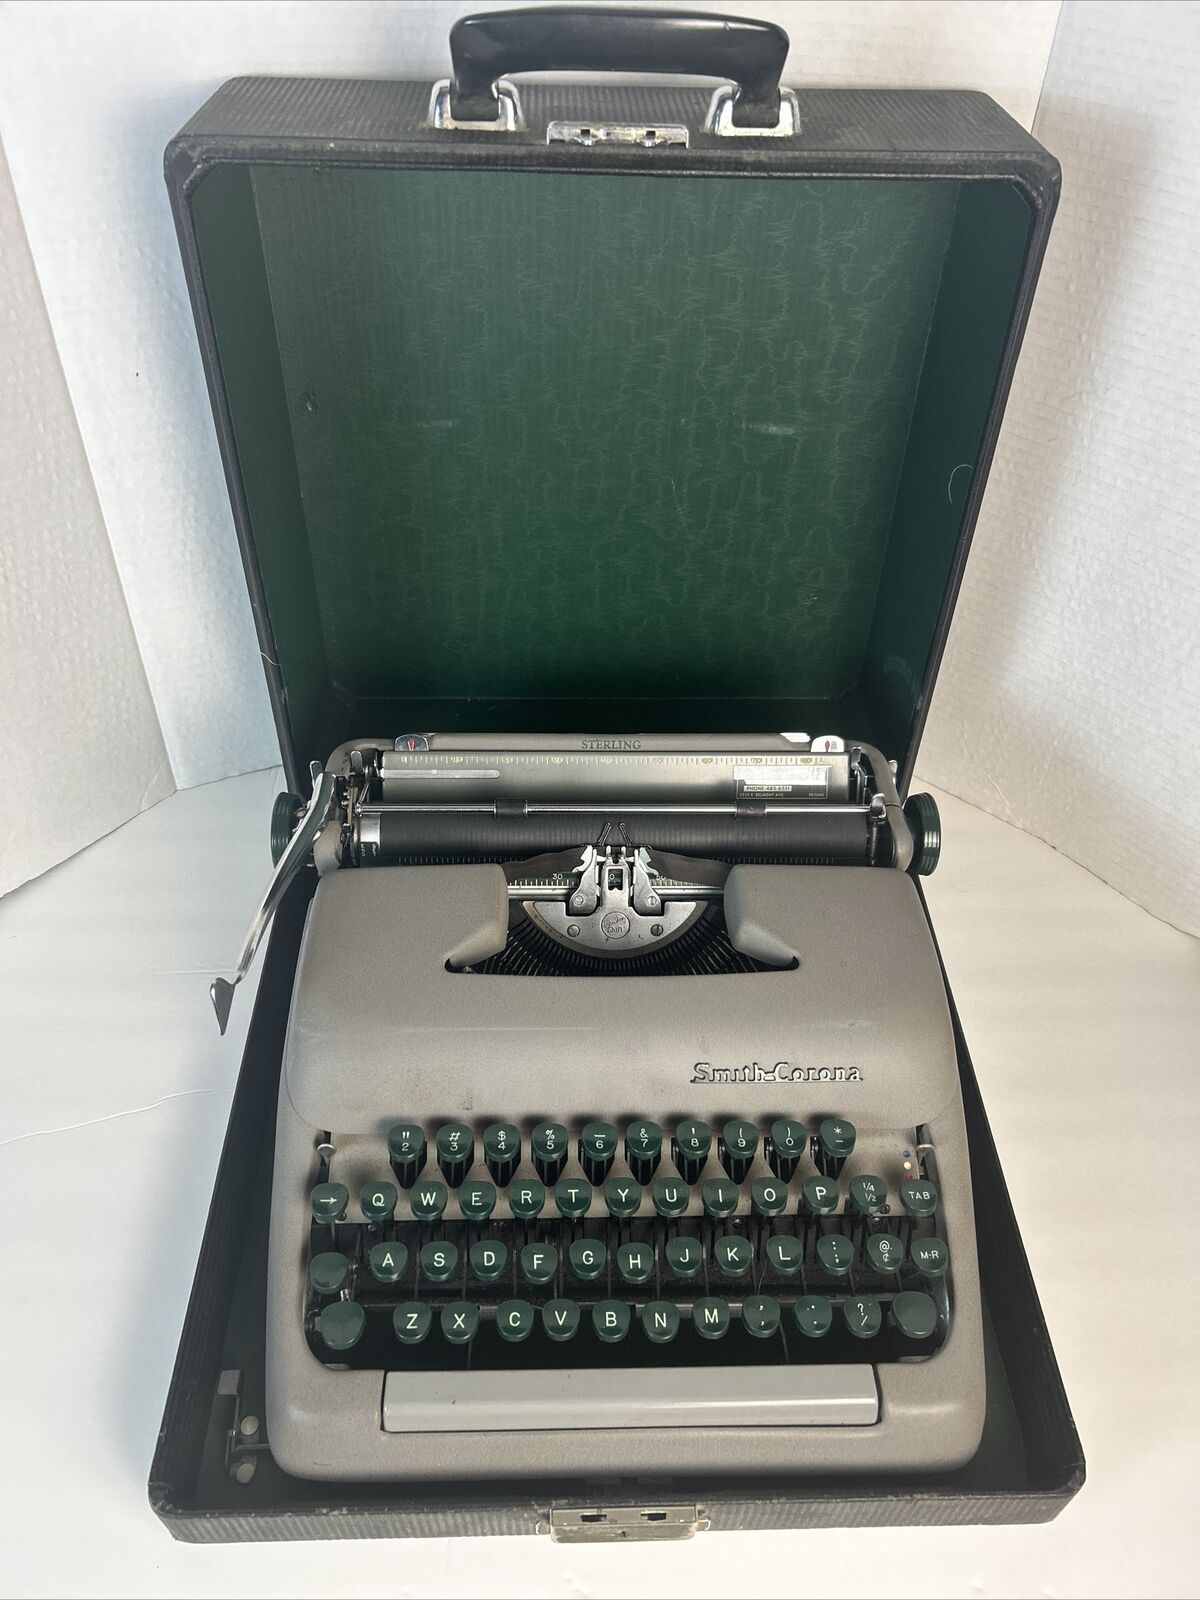 Vintage 1954 Smith Corona Silent Super Typewriter With Tweed Case. VGC